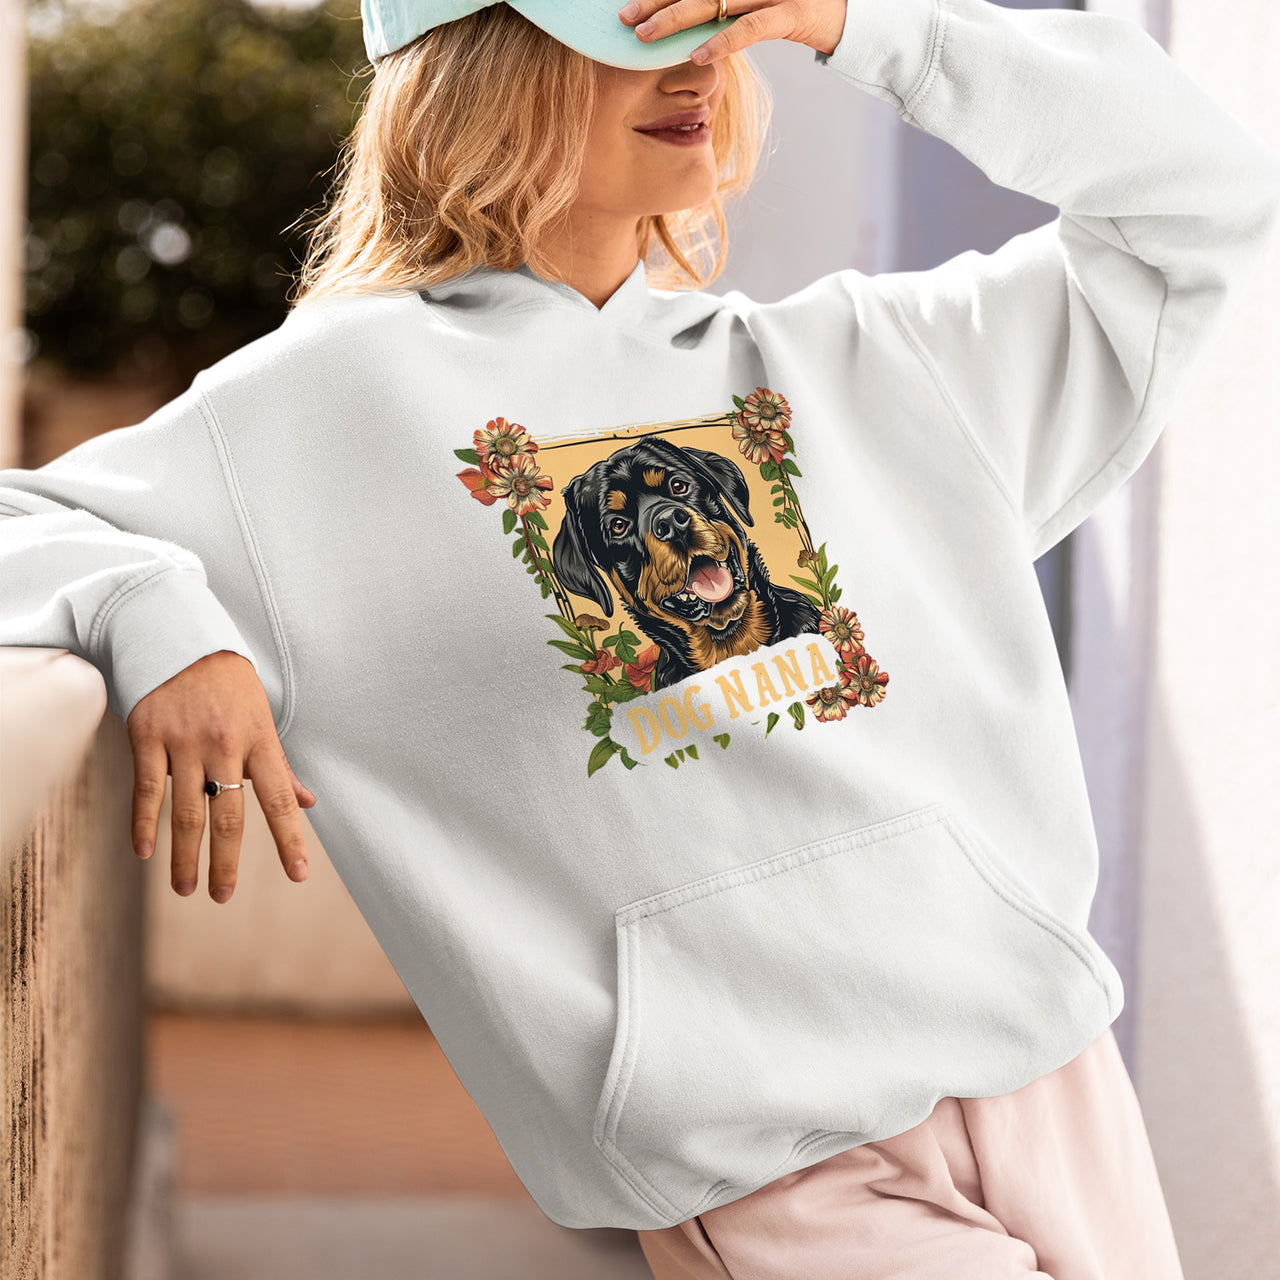 Rottweiler Dog T-shirt, Pet Lover Shirt, Dog Lover Shirt, Dog Nana T-Shirt, Dog Owner Shirt, Gift For Dog Grandma, Funny Dog Shirts, Women Dog T-Shirt, Mother's Day Gift, Dog Lover Wife Gifts, Dog Shirt